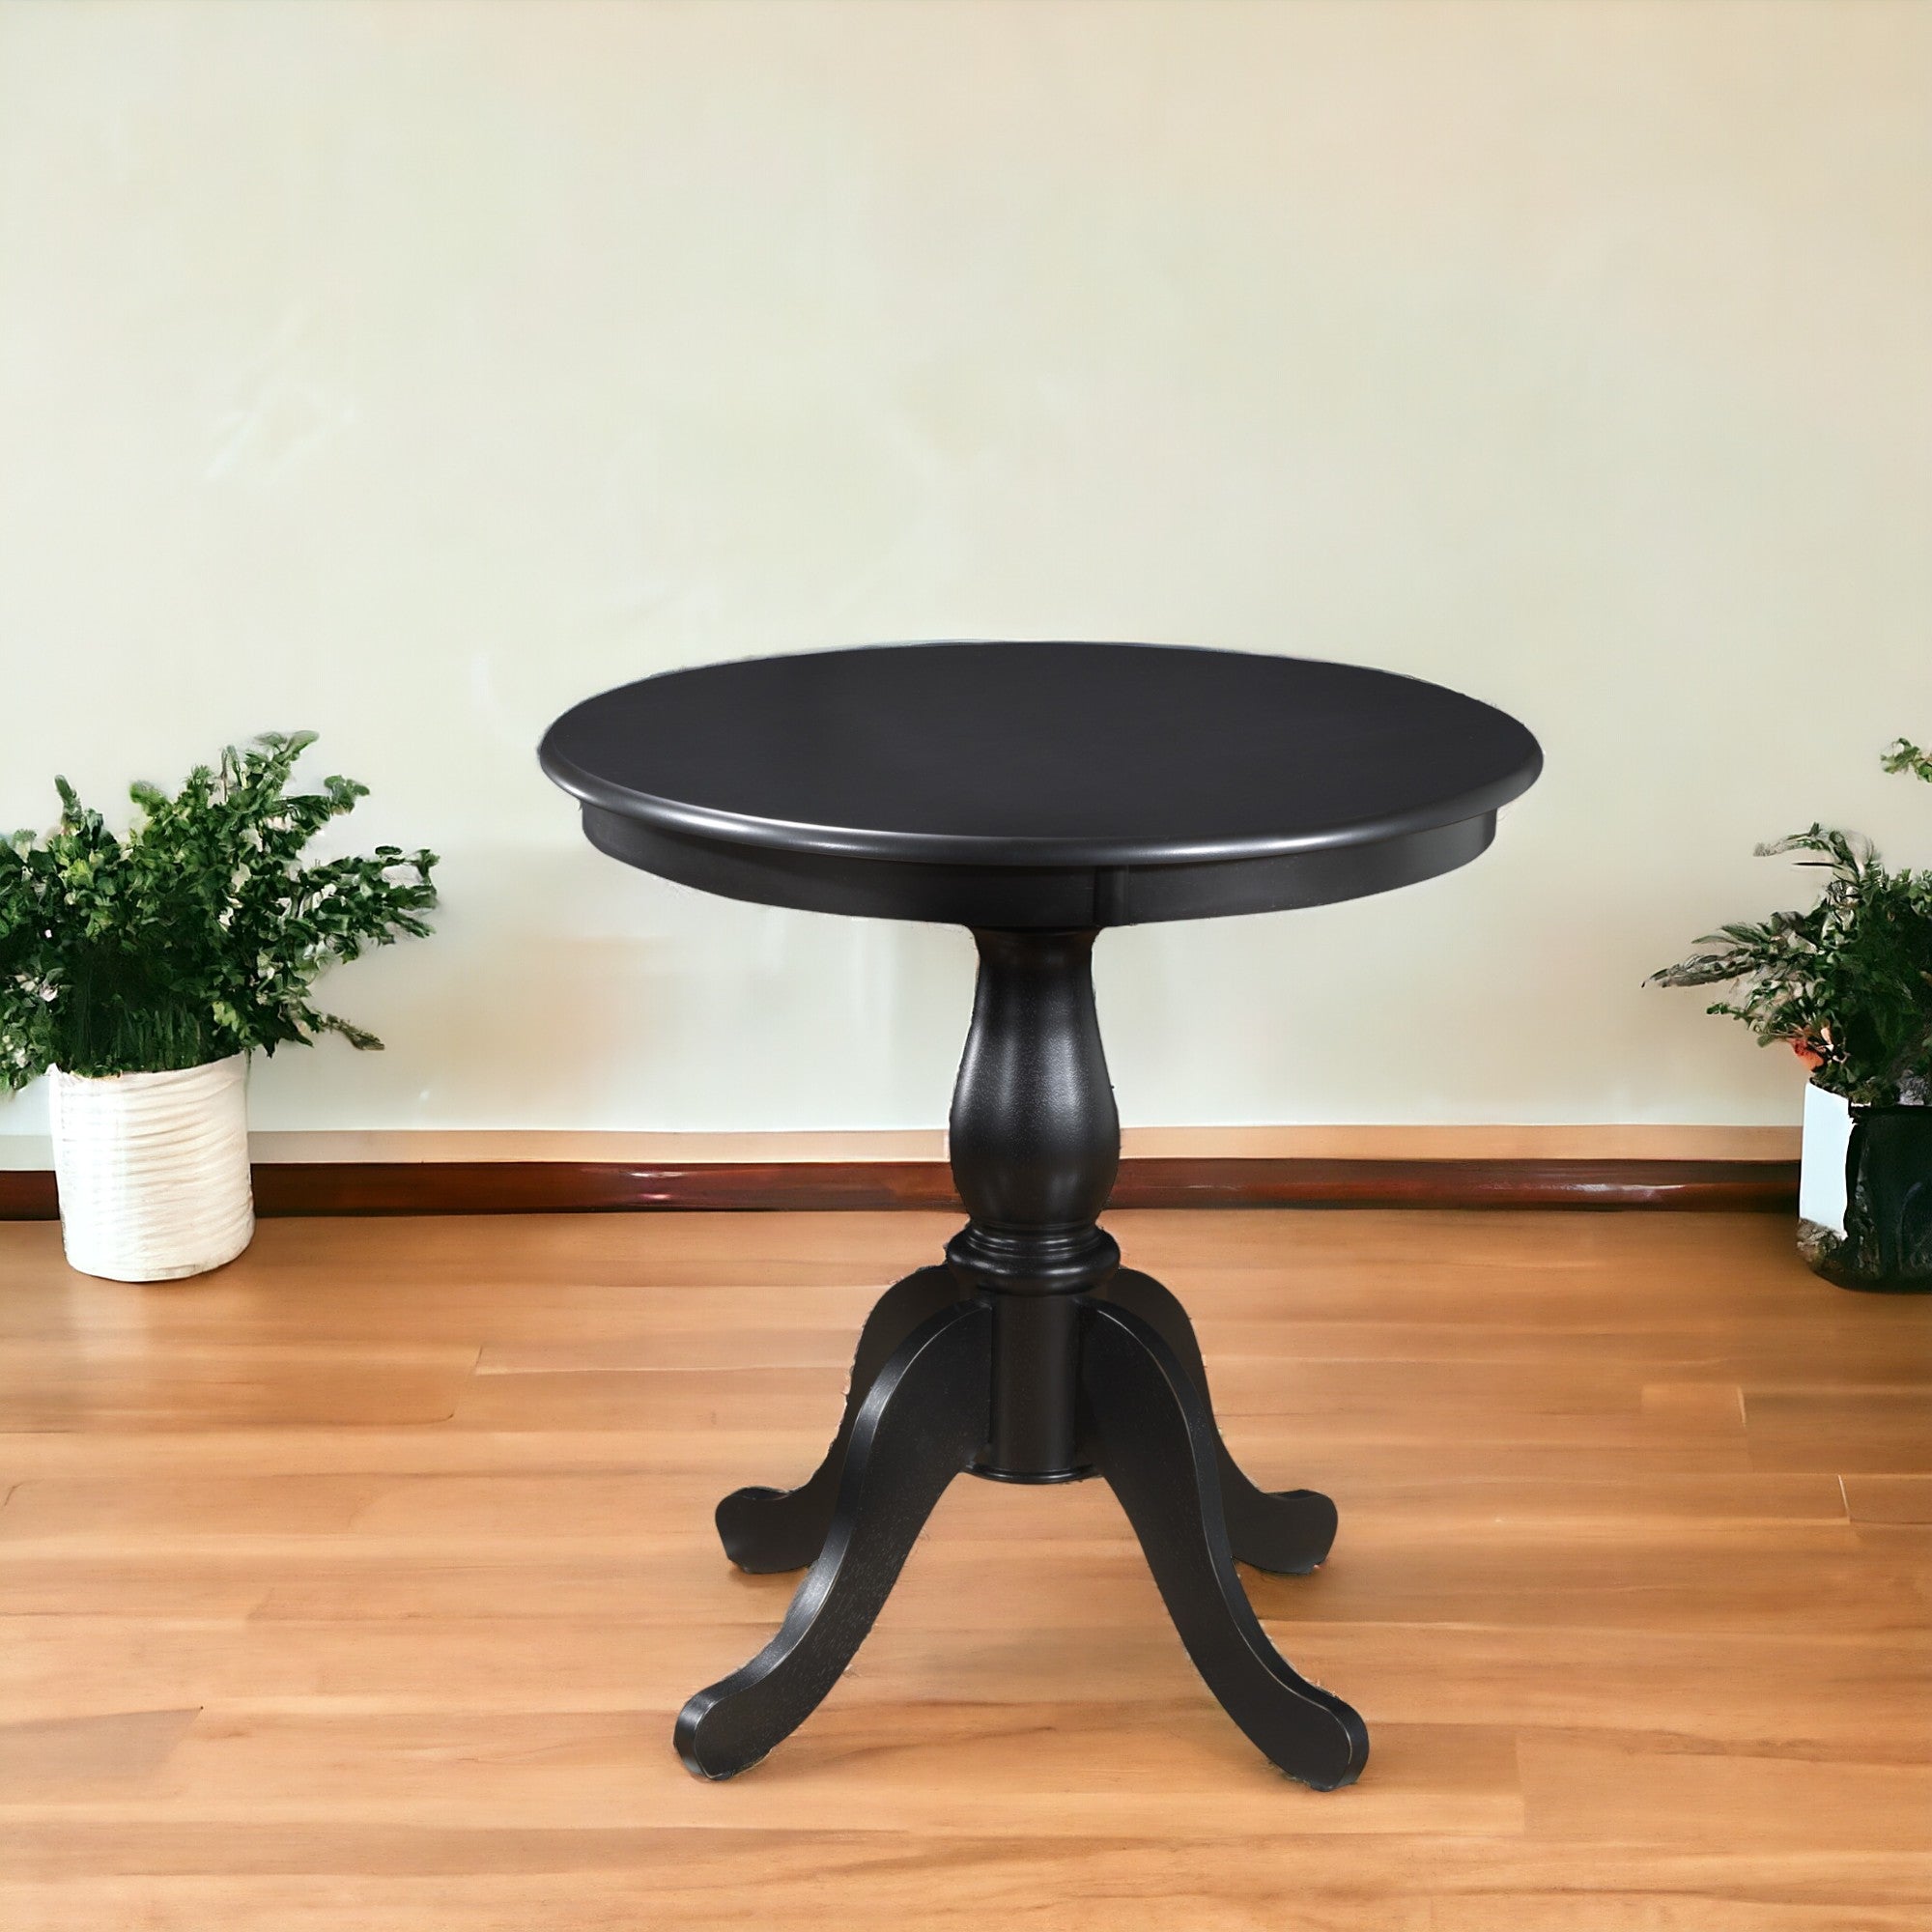 36" Antique Black Round Turned Pedestal Base Wood Dining Table